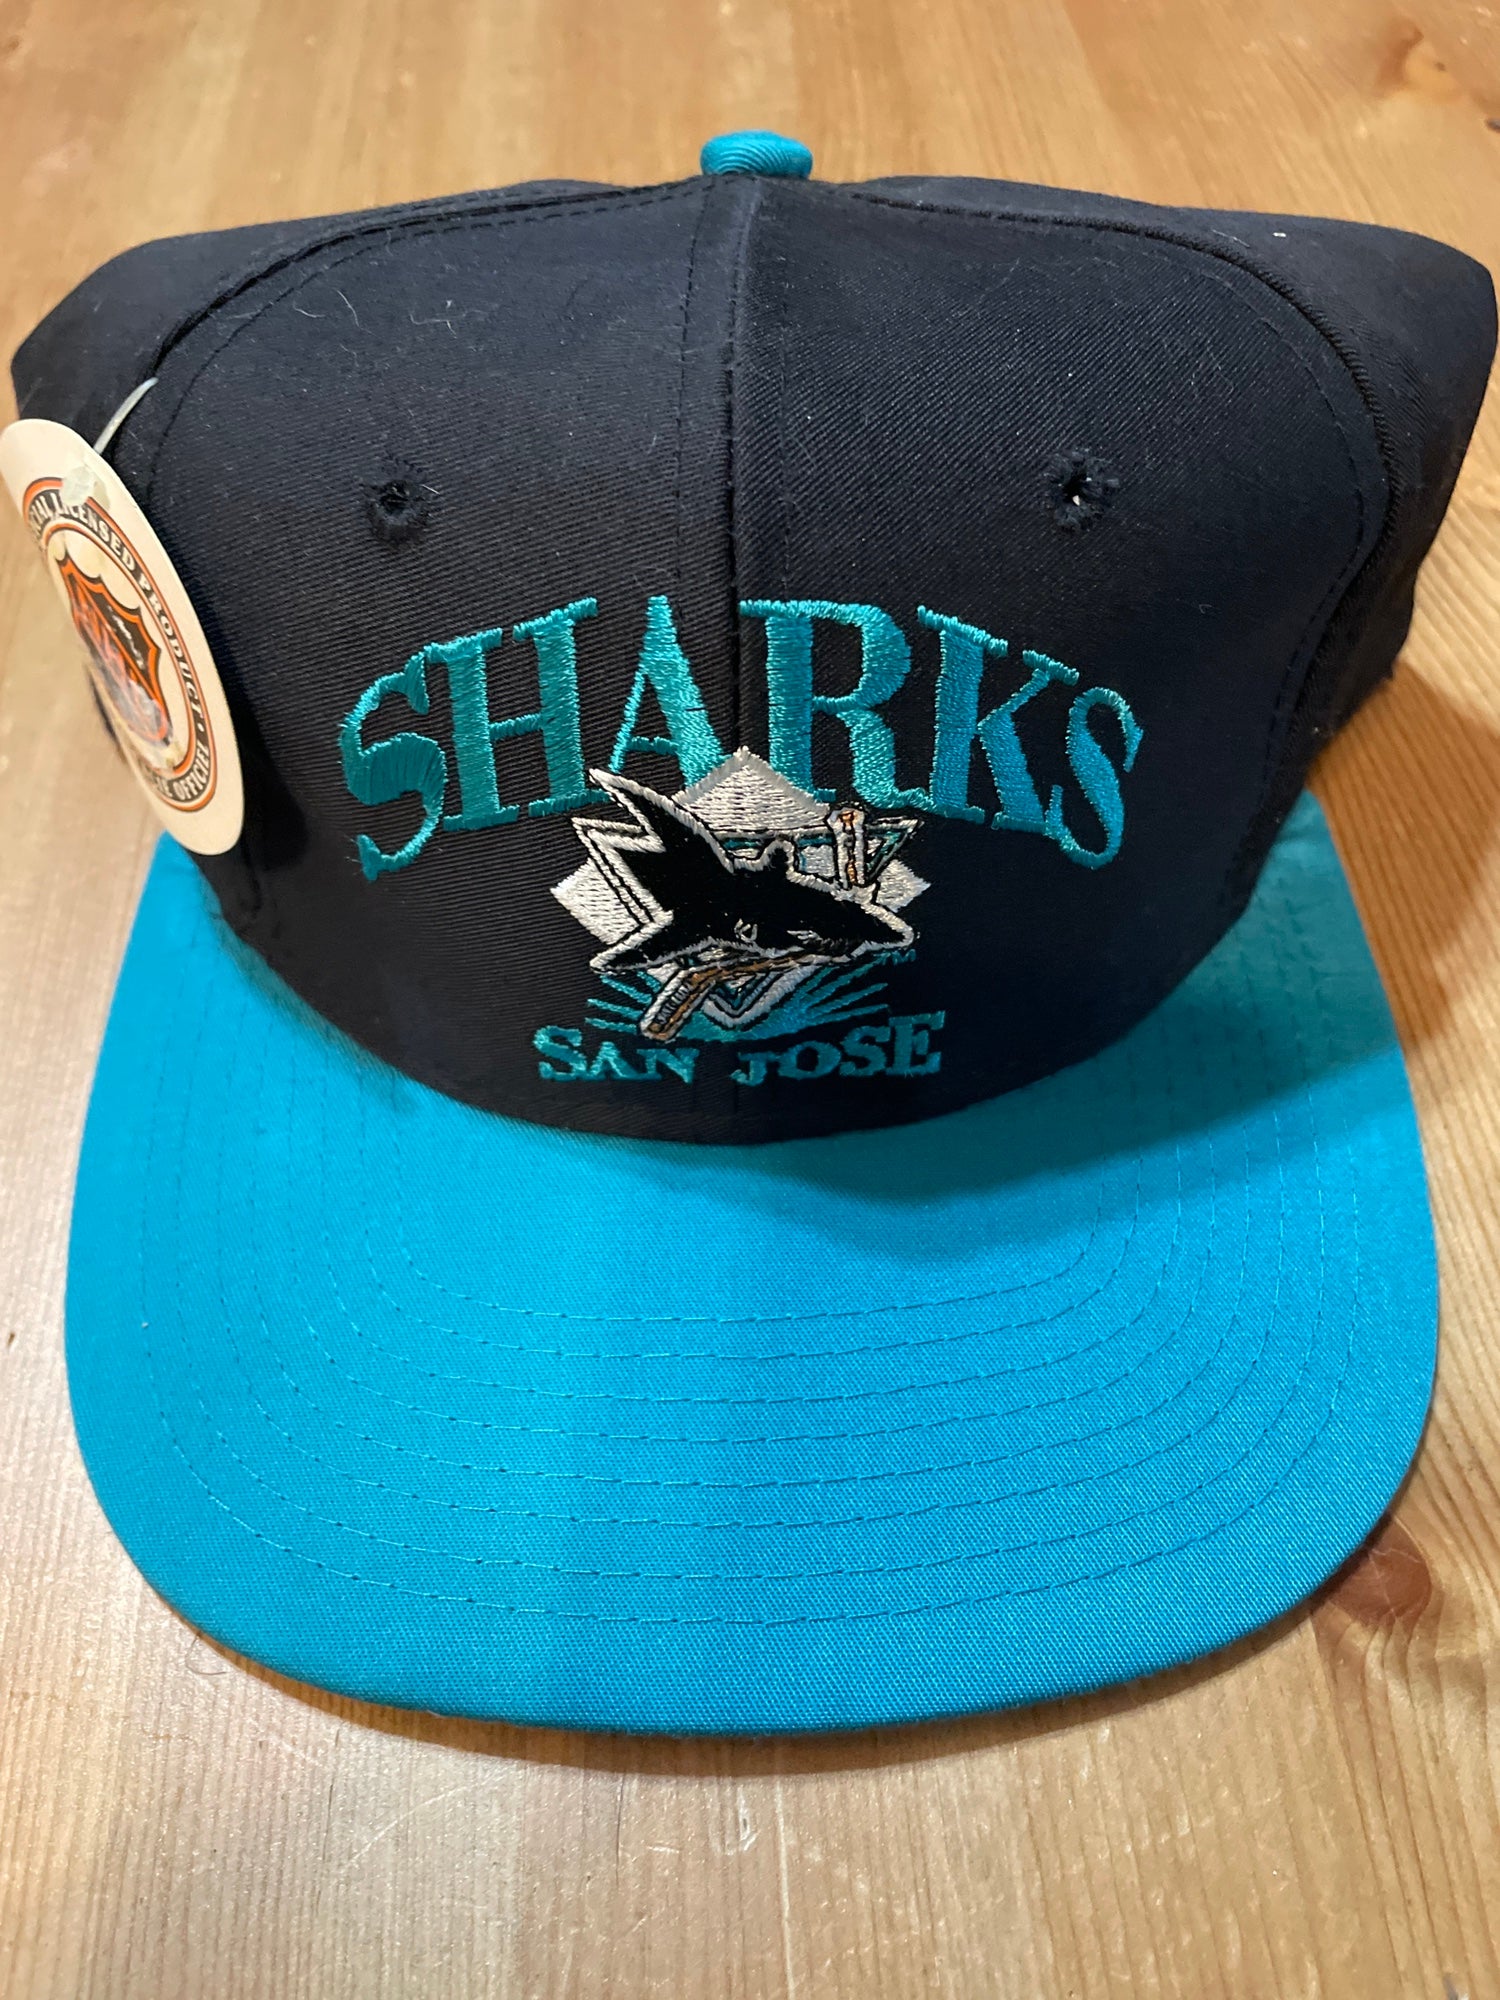 Vintage Sharks gear